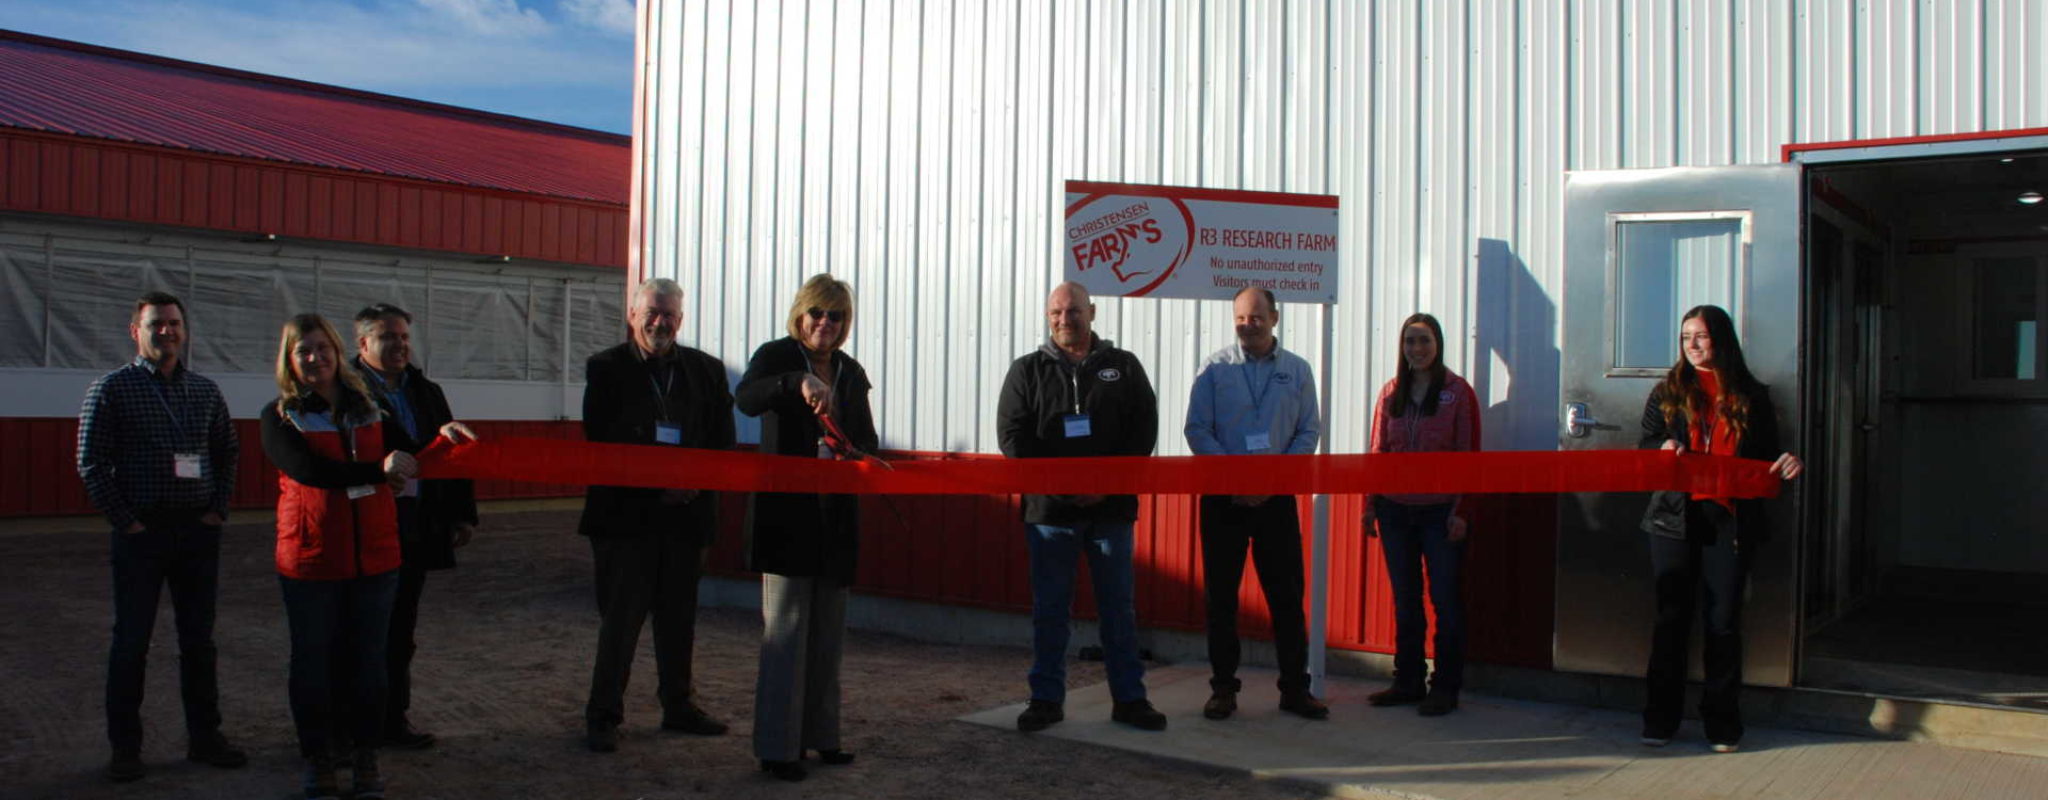 Christensen Farms’ Celebrates New Research Farm Opening